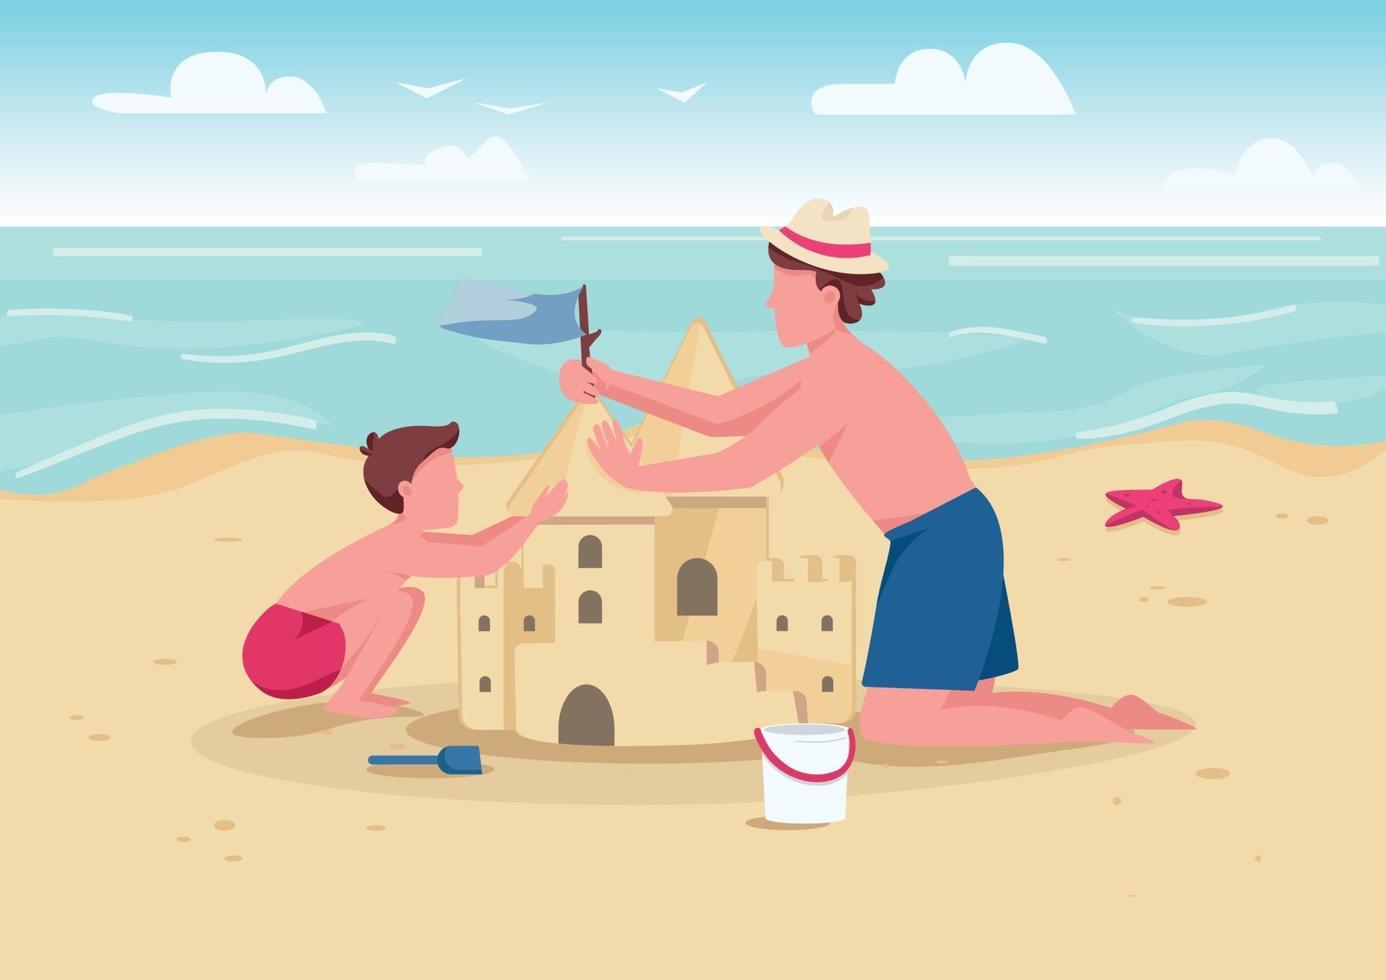 Beach family activity flat color vector illustration